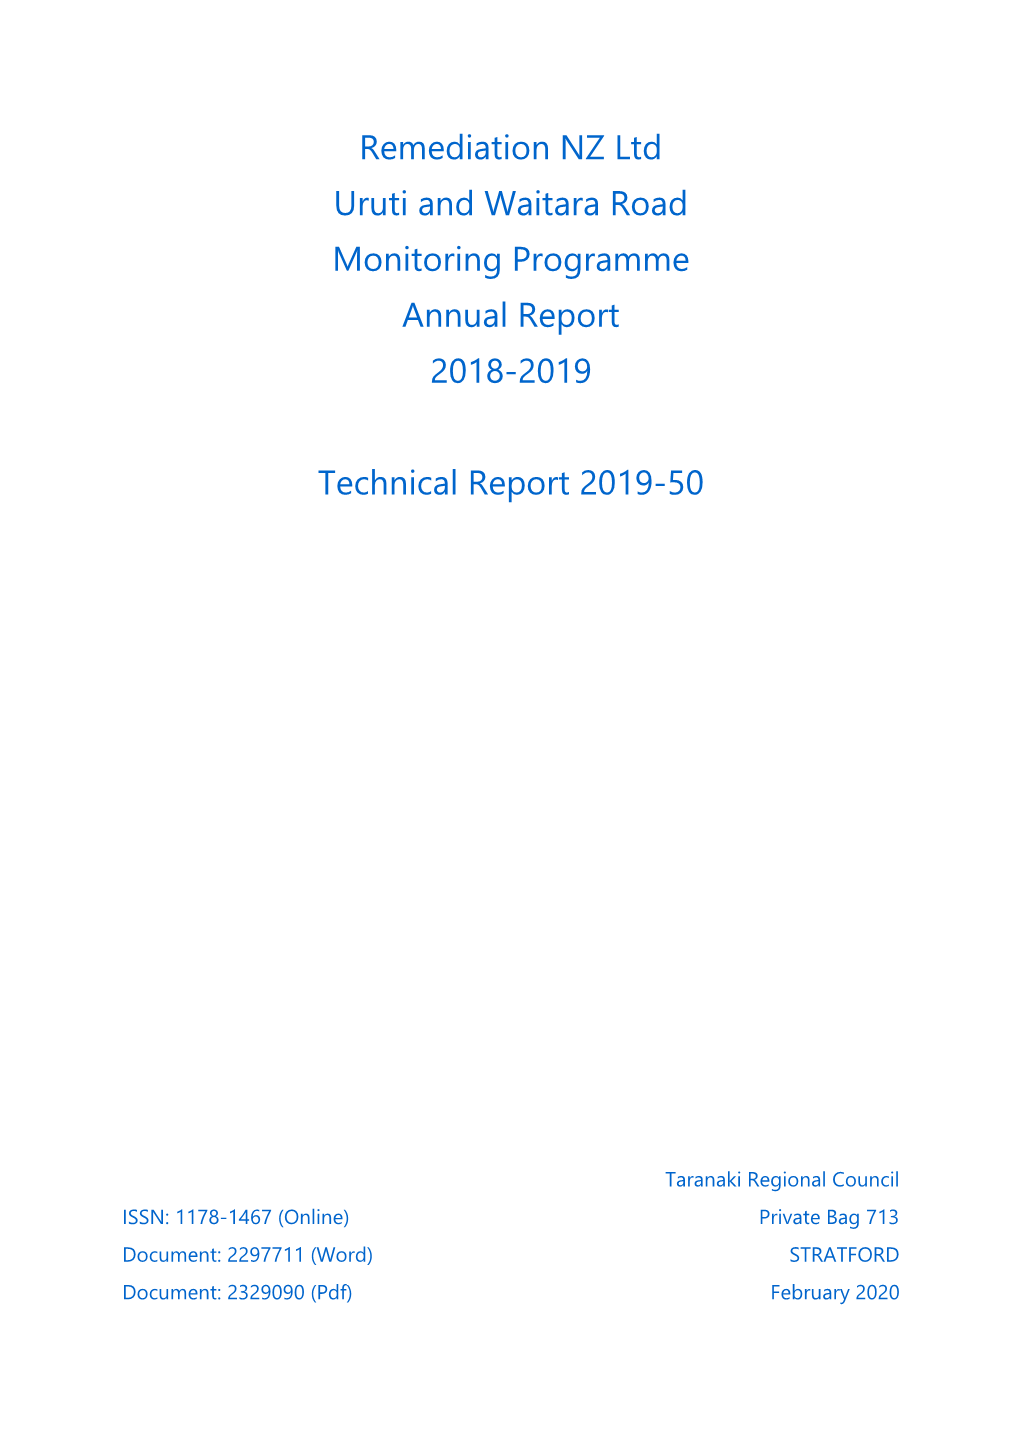 Remediation NZ Ltd Consent Monitoring Report